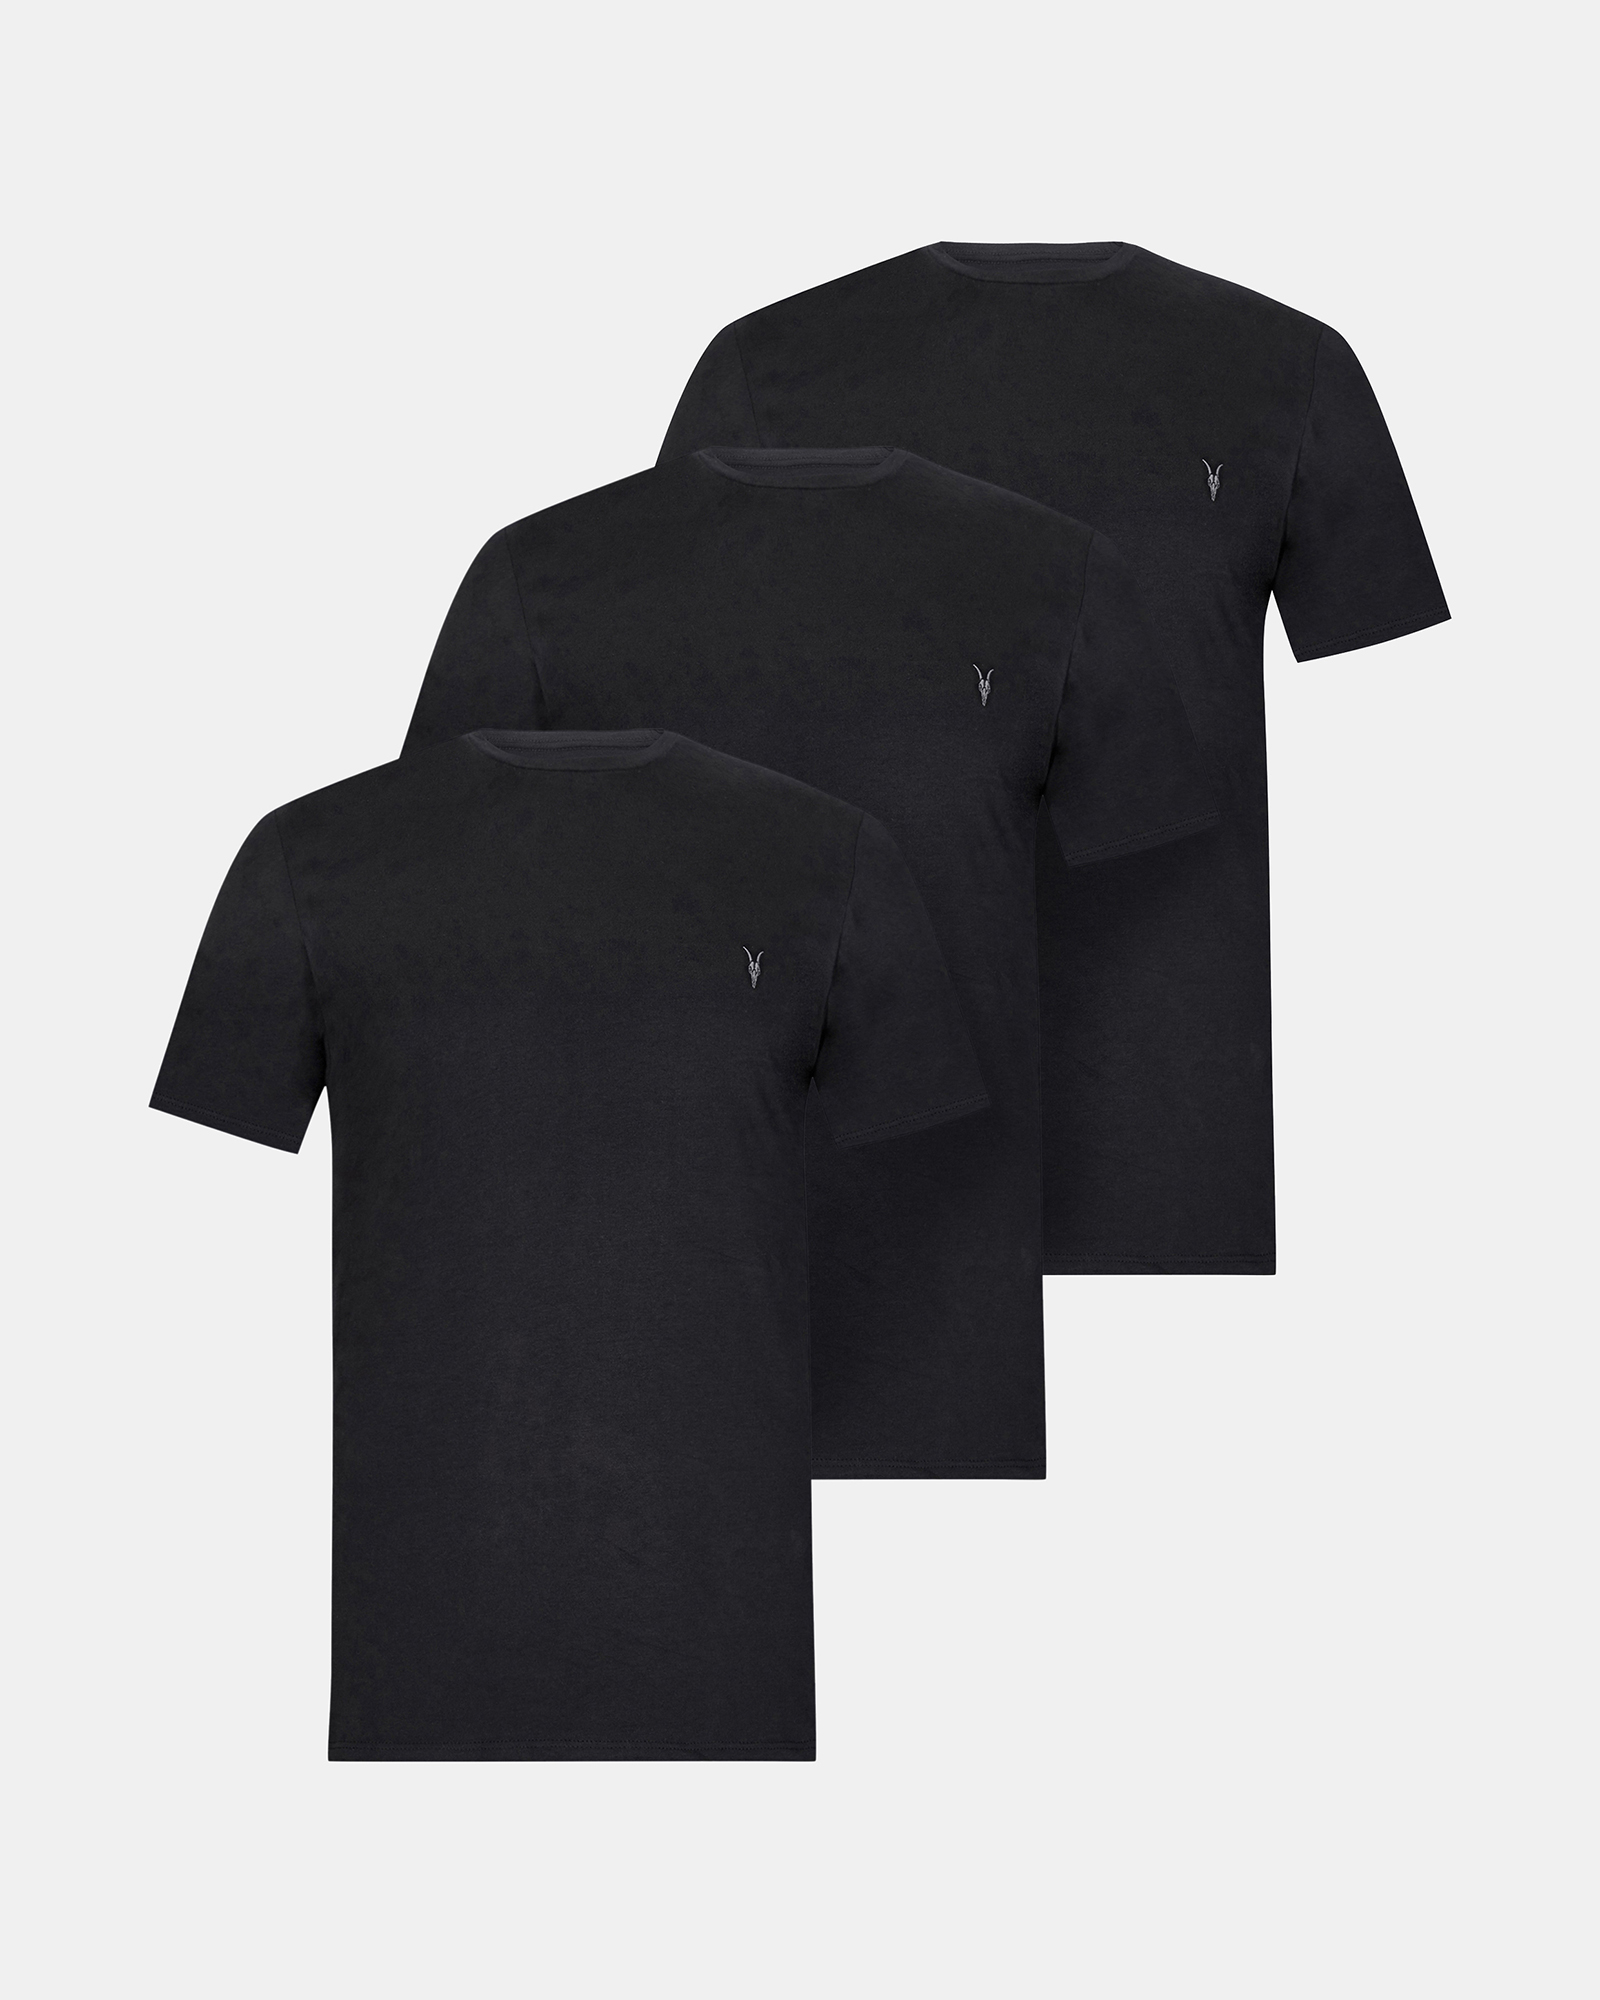 AllSaints Men's Brace Tonic 3 Pack T-Shirts, Black